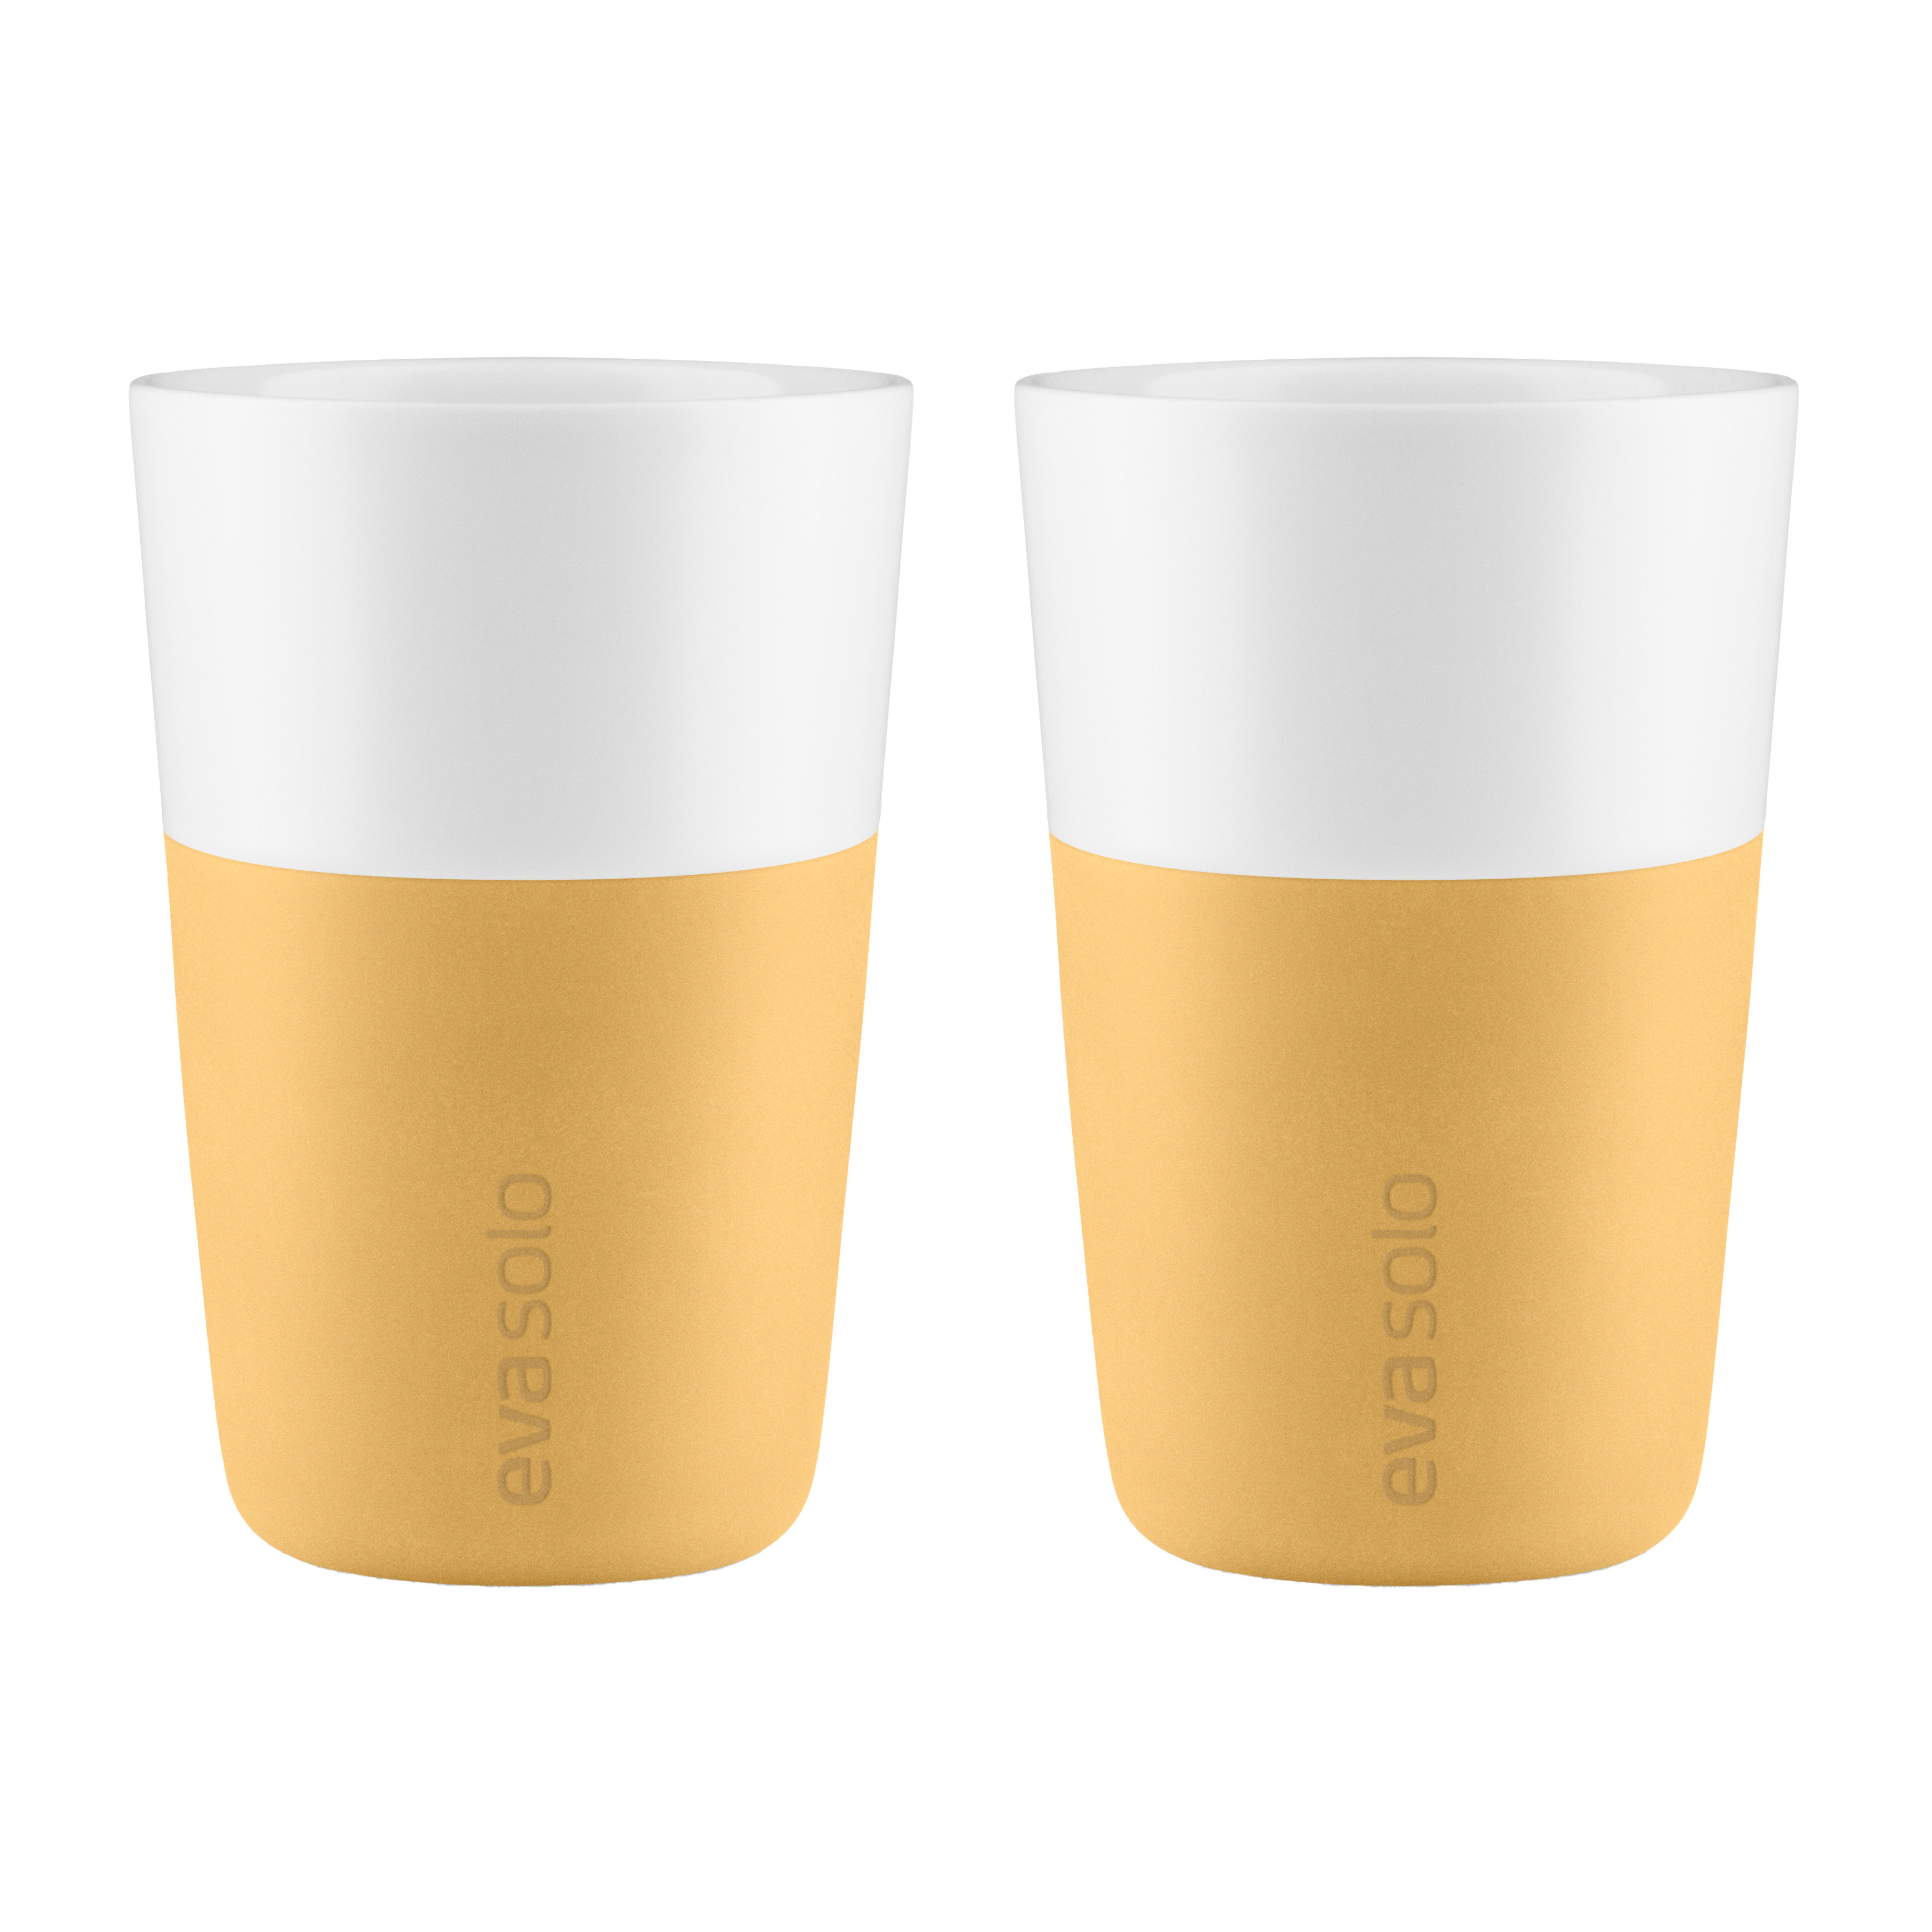 https://www.nordicnest.com/assets/blobs/eva-solo-eva-solo-cafe-latte-mug-2-pack-golden-sand/577175-01_1_ProductImageMain-6ceeb2b16b.jpeg